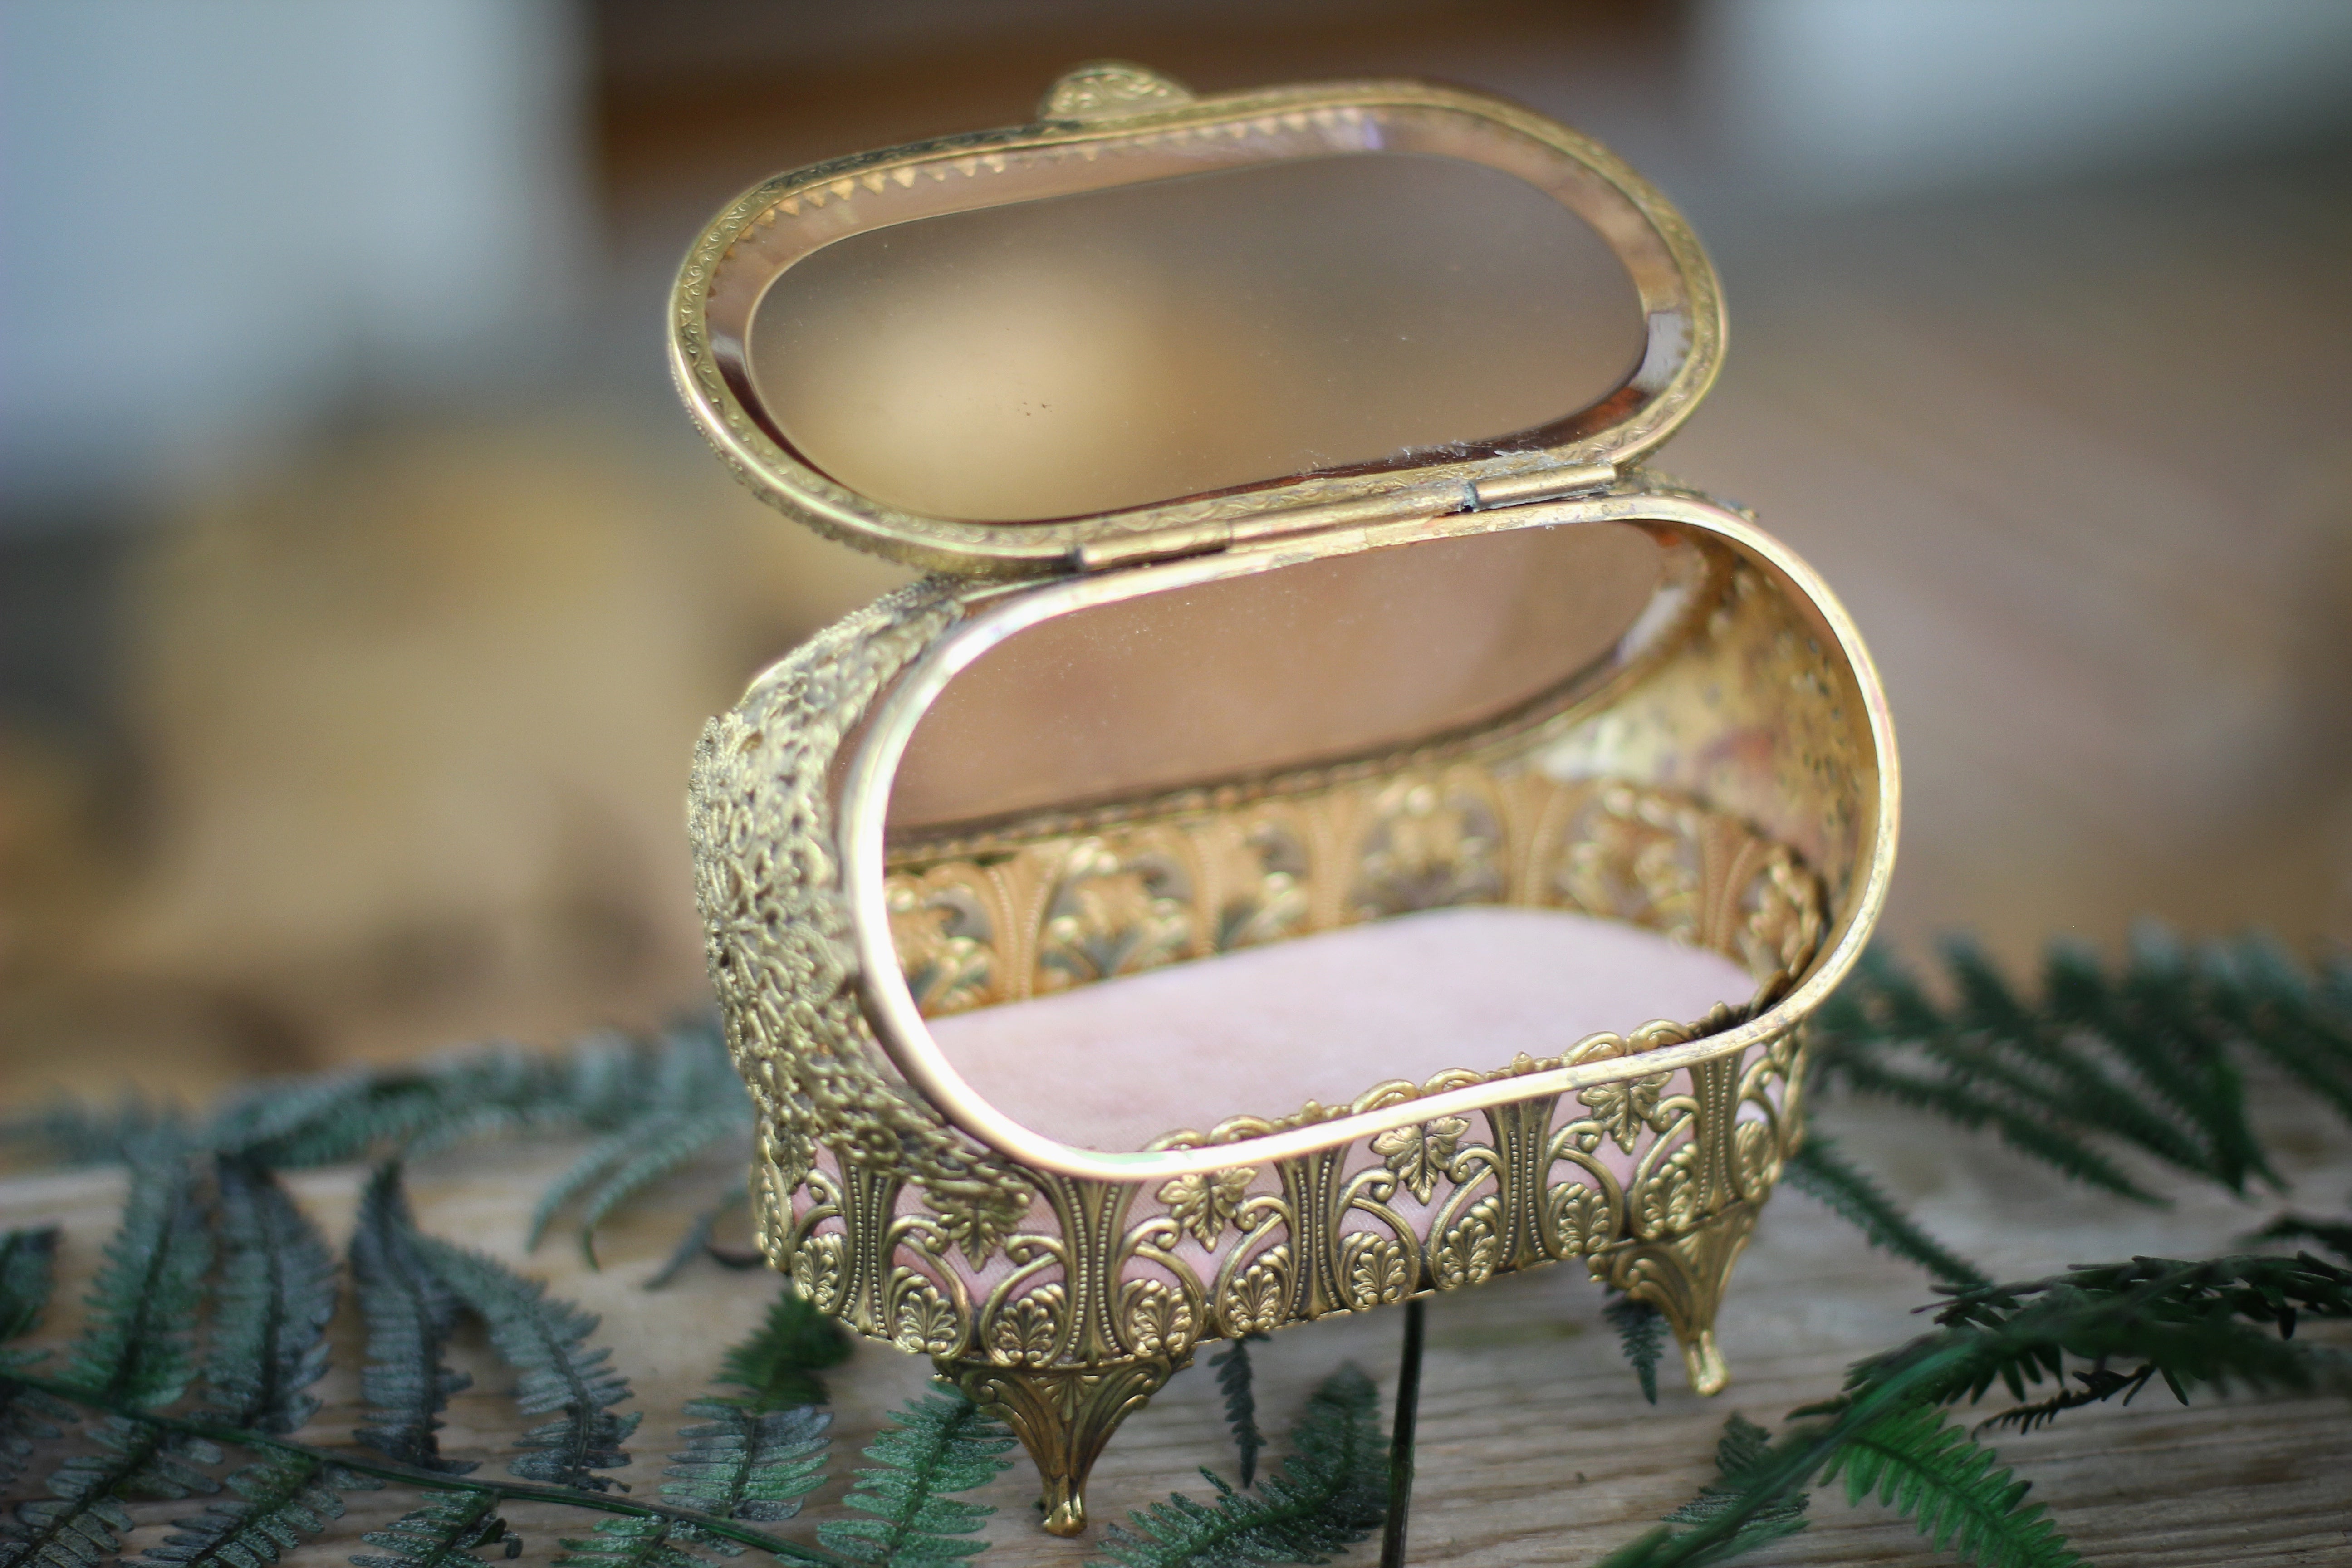 Antique Rare Amber Tinted Jewelry Box